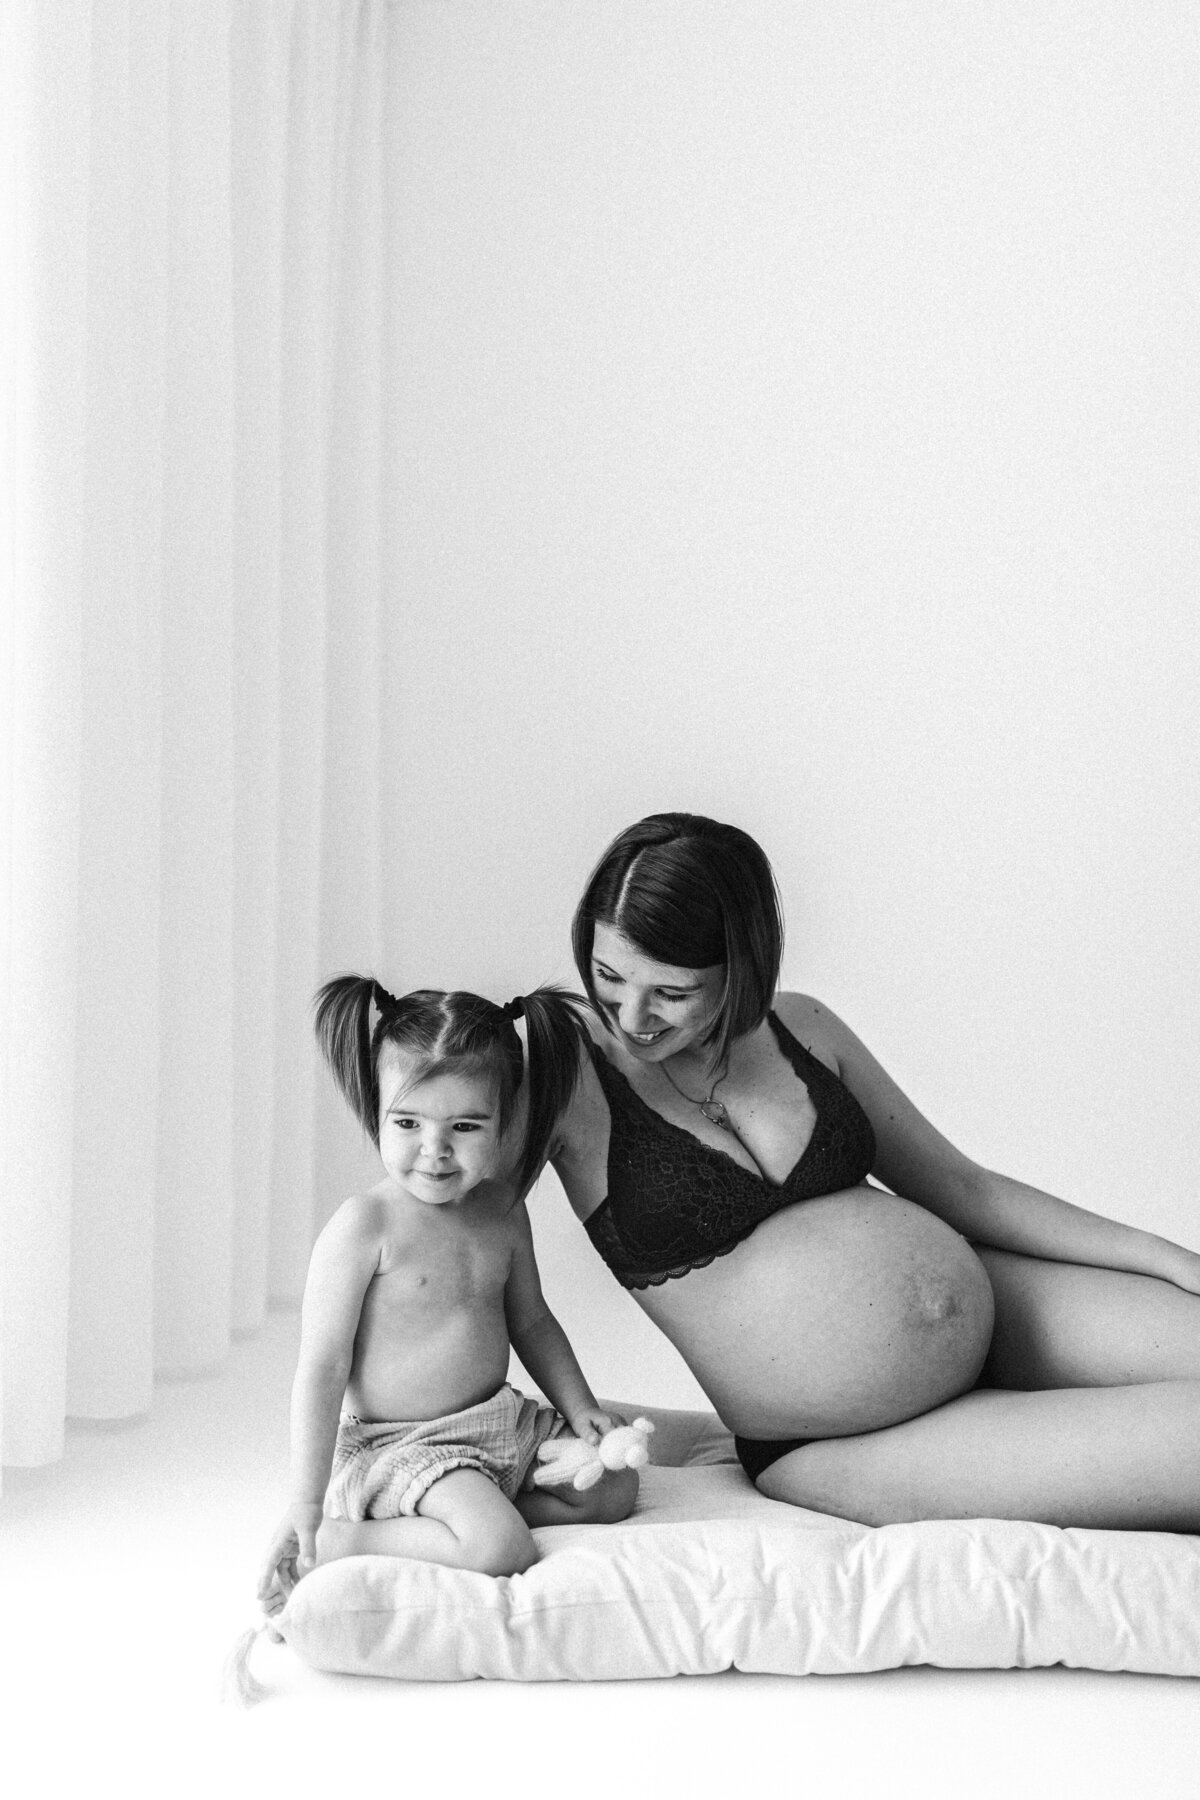 Toddler and maternity photoshoot hampshire studio